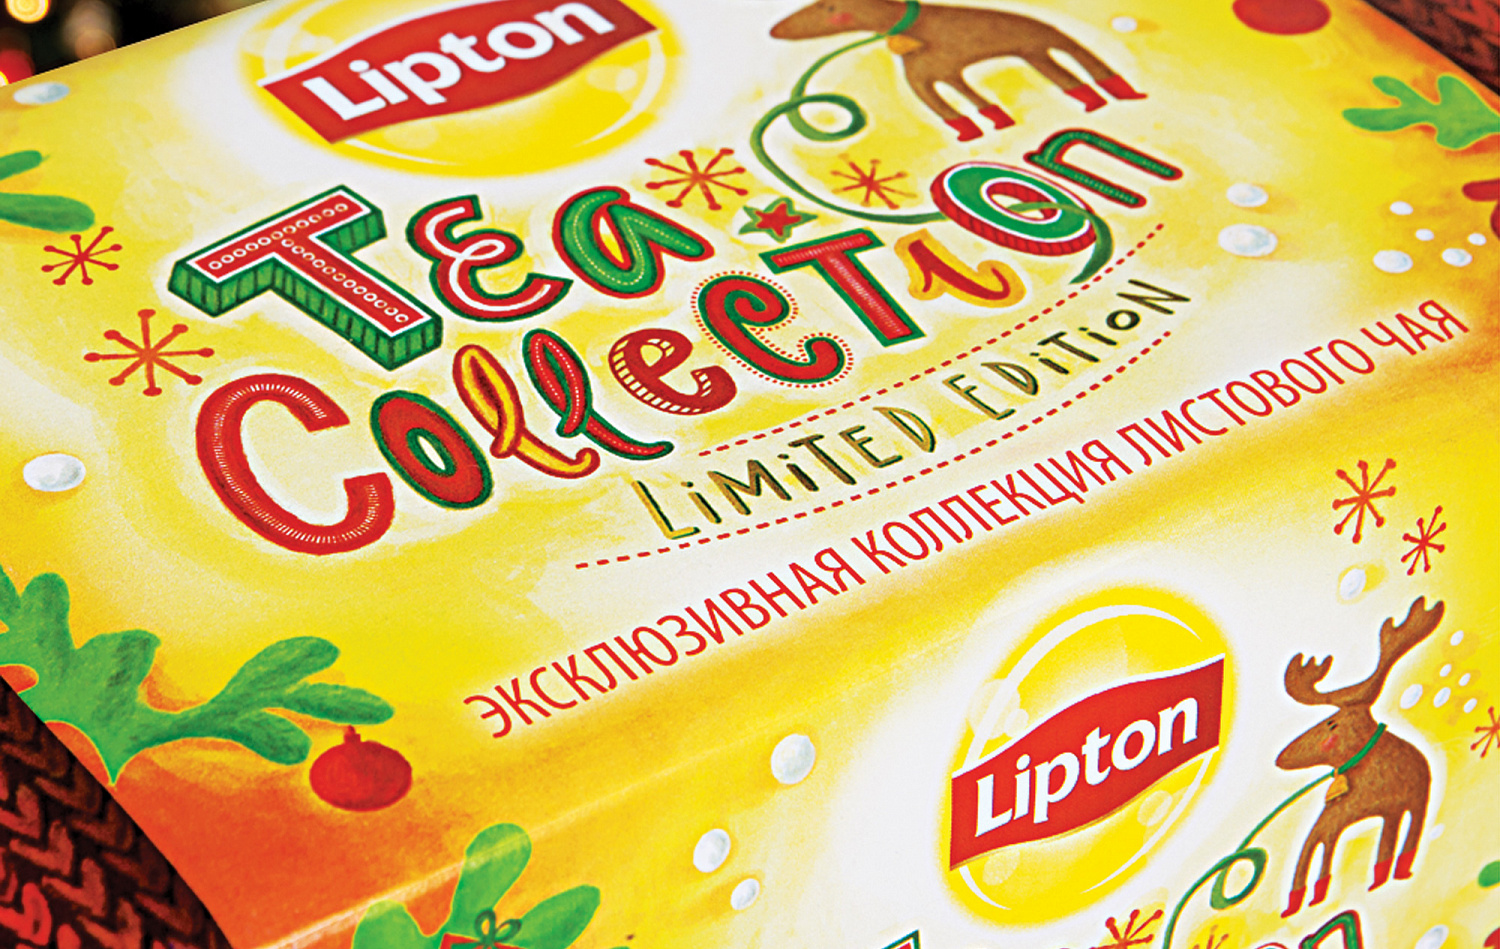 Lipton Tea Collection - Портфолио Depot